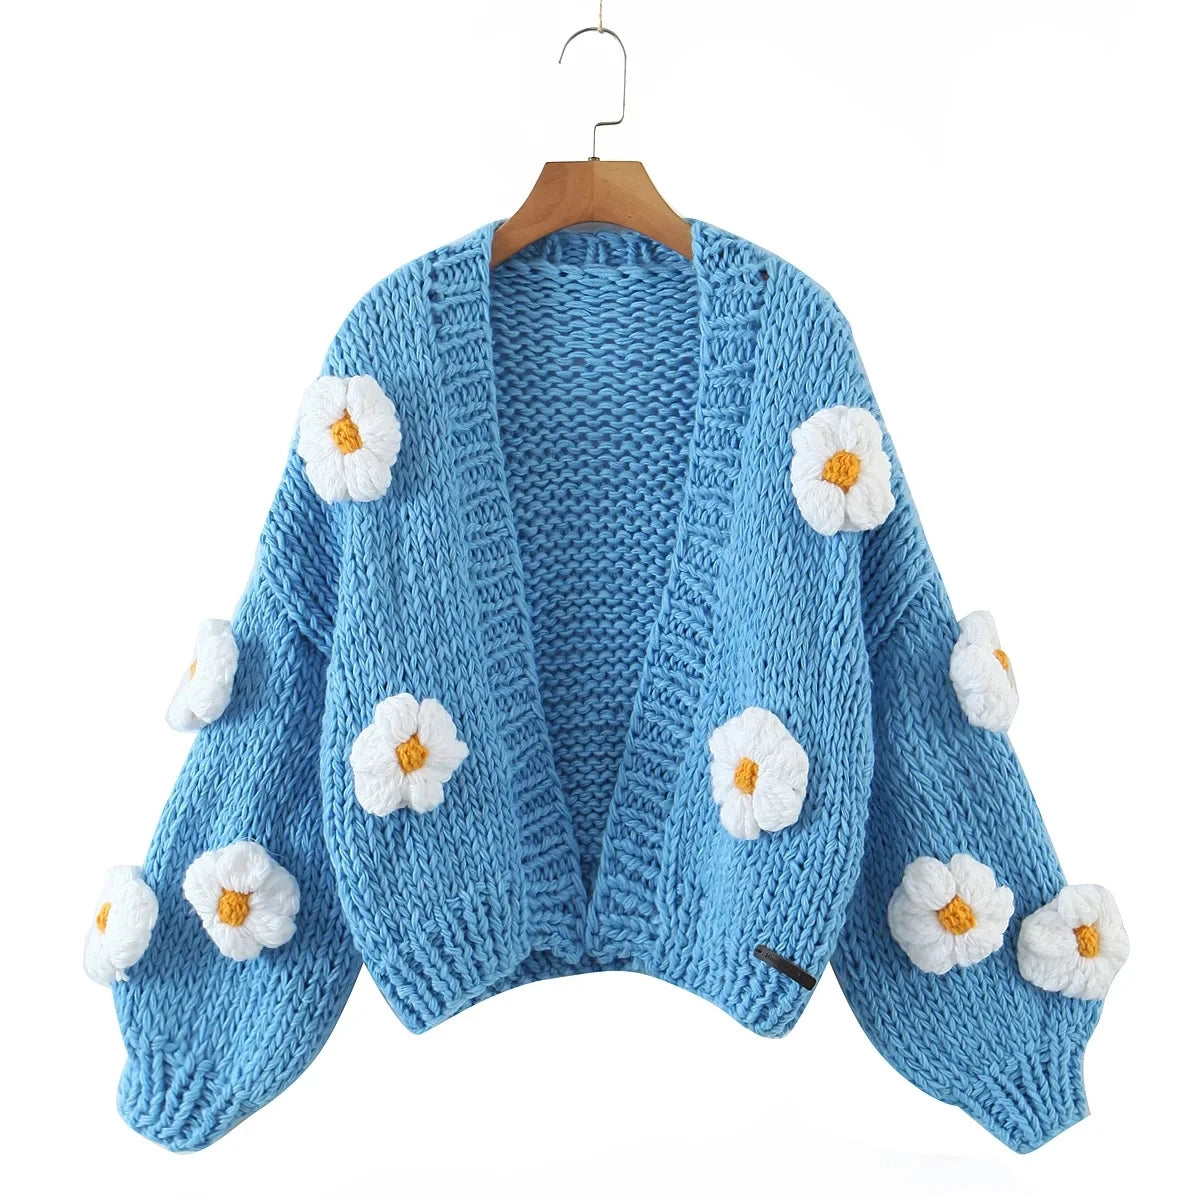 3D Flower Handmade Knitted Cardigan